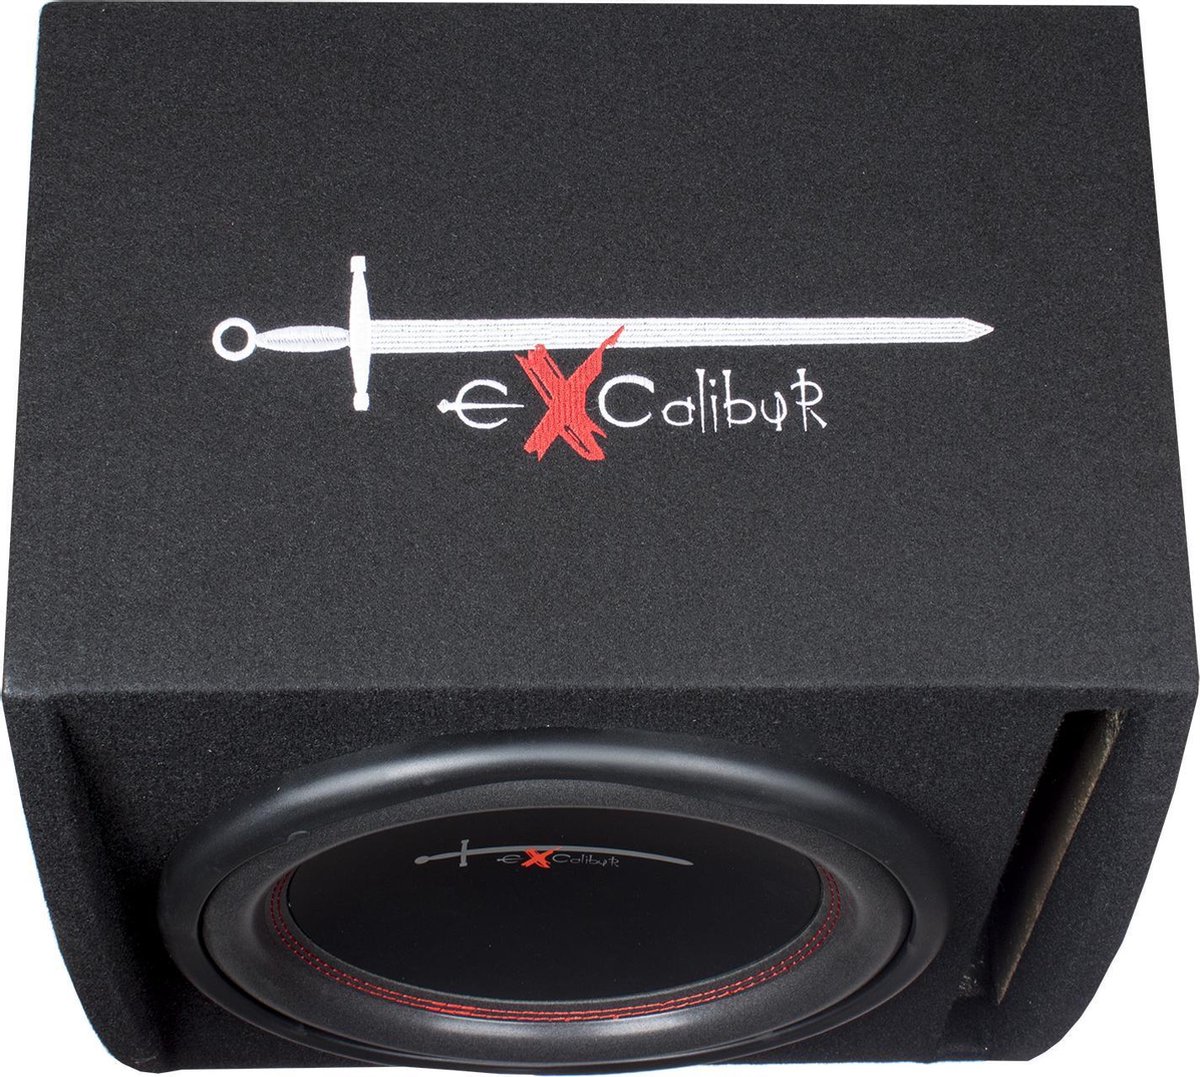 Excalibur Basspaket Endstufe Subwoofer Kabelset 1000 Watt Komplettset Bass Pac